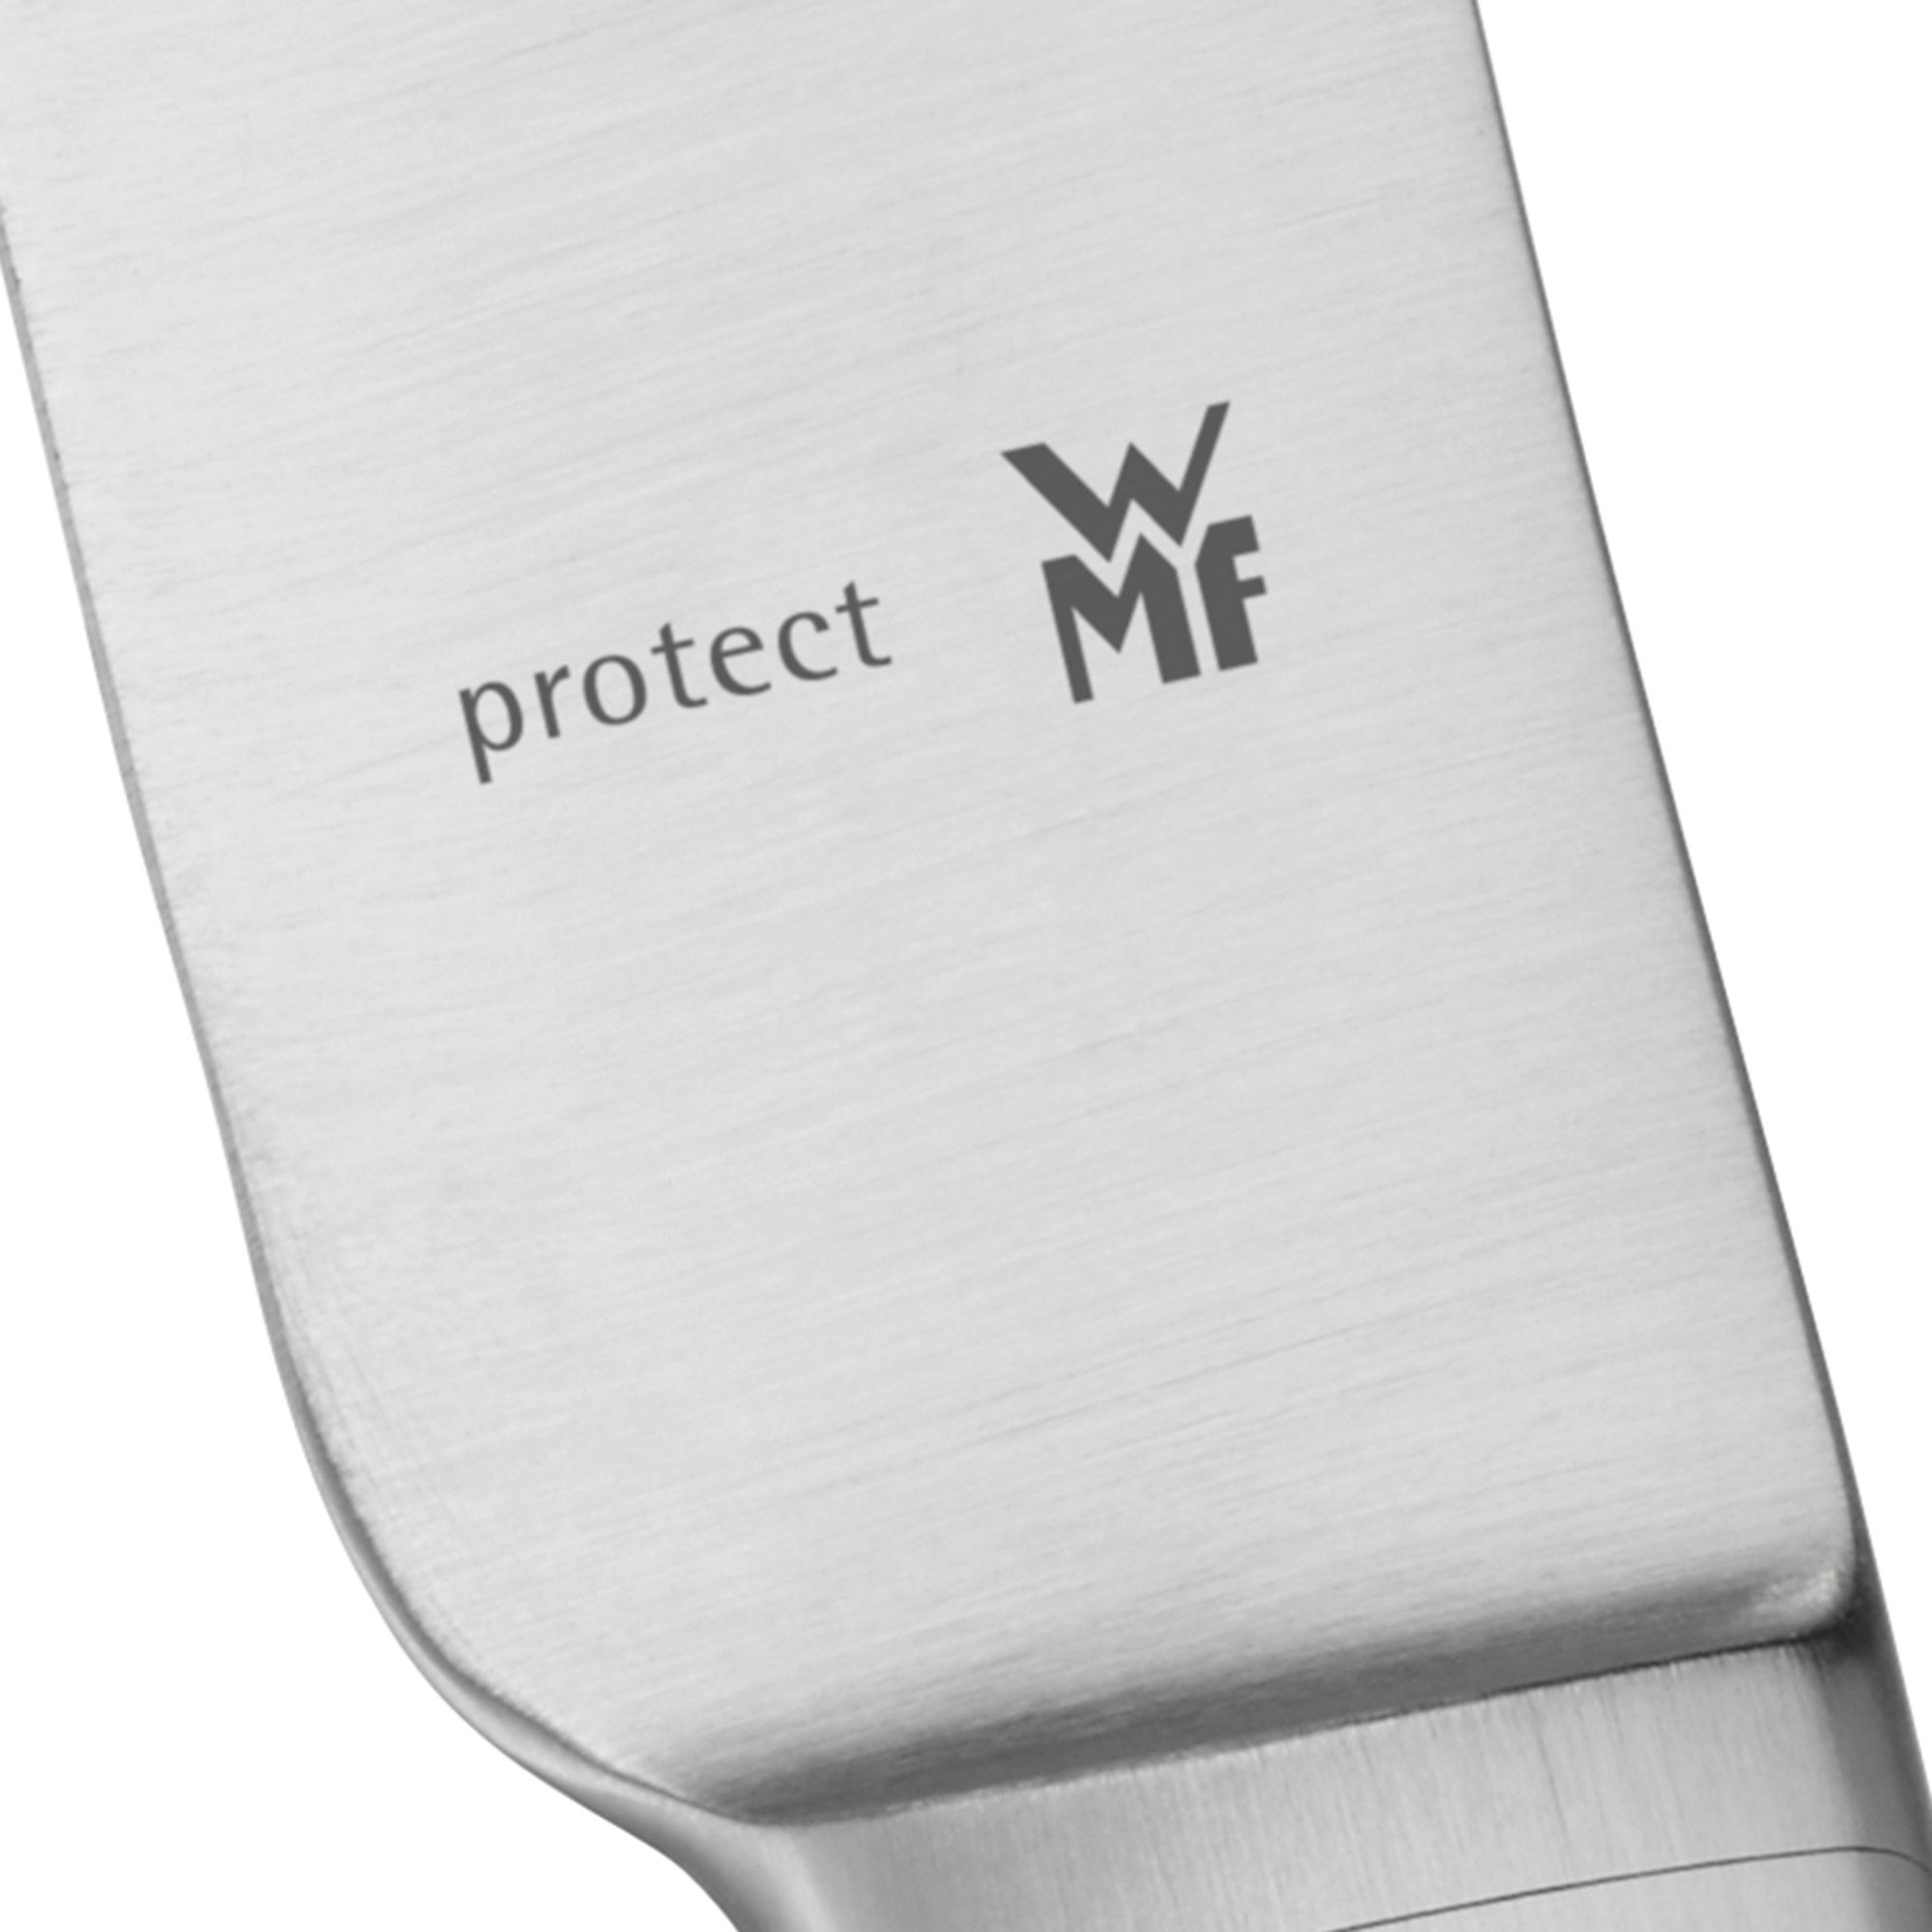 kratzbeständig, poliert, WMF spülmaschinenfest Stück), (1 protect Tafelmesser Cromargan Edelstahl Kult